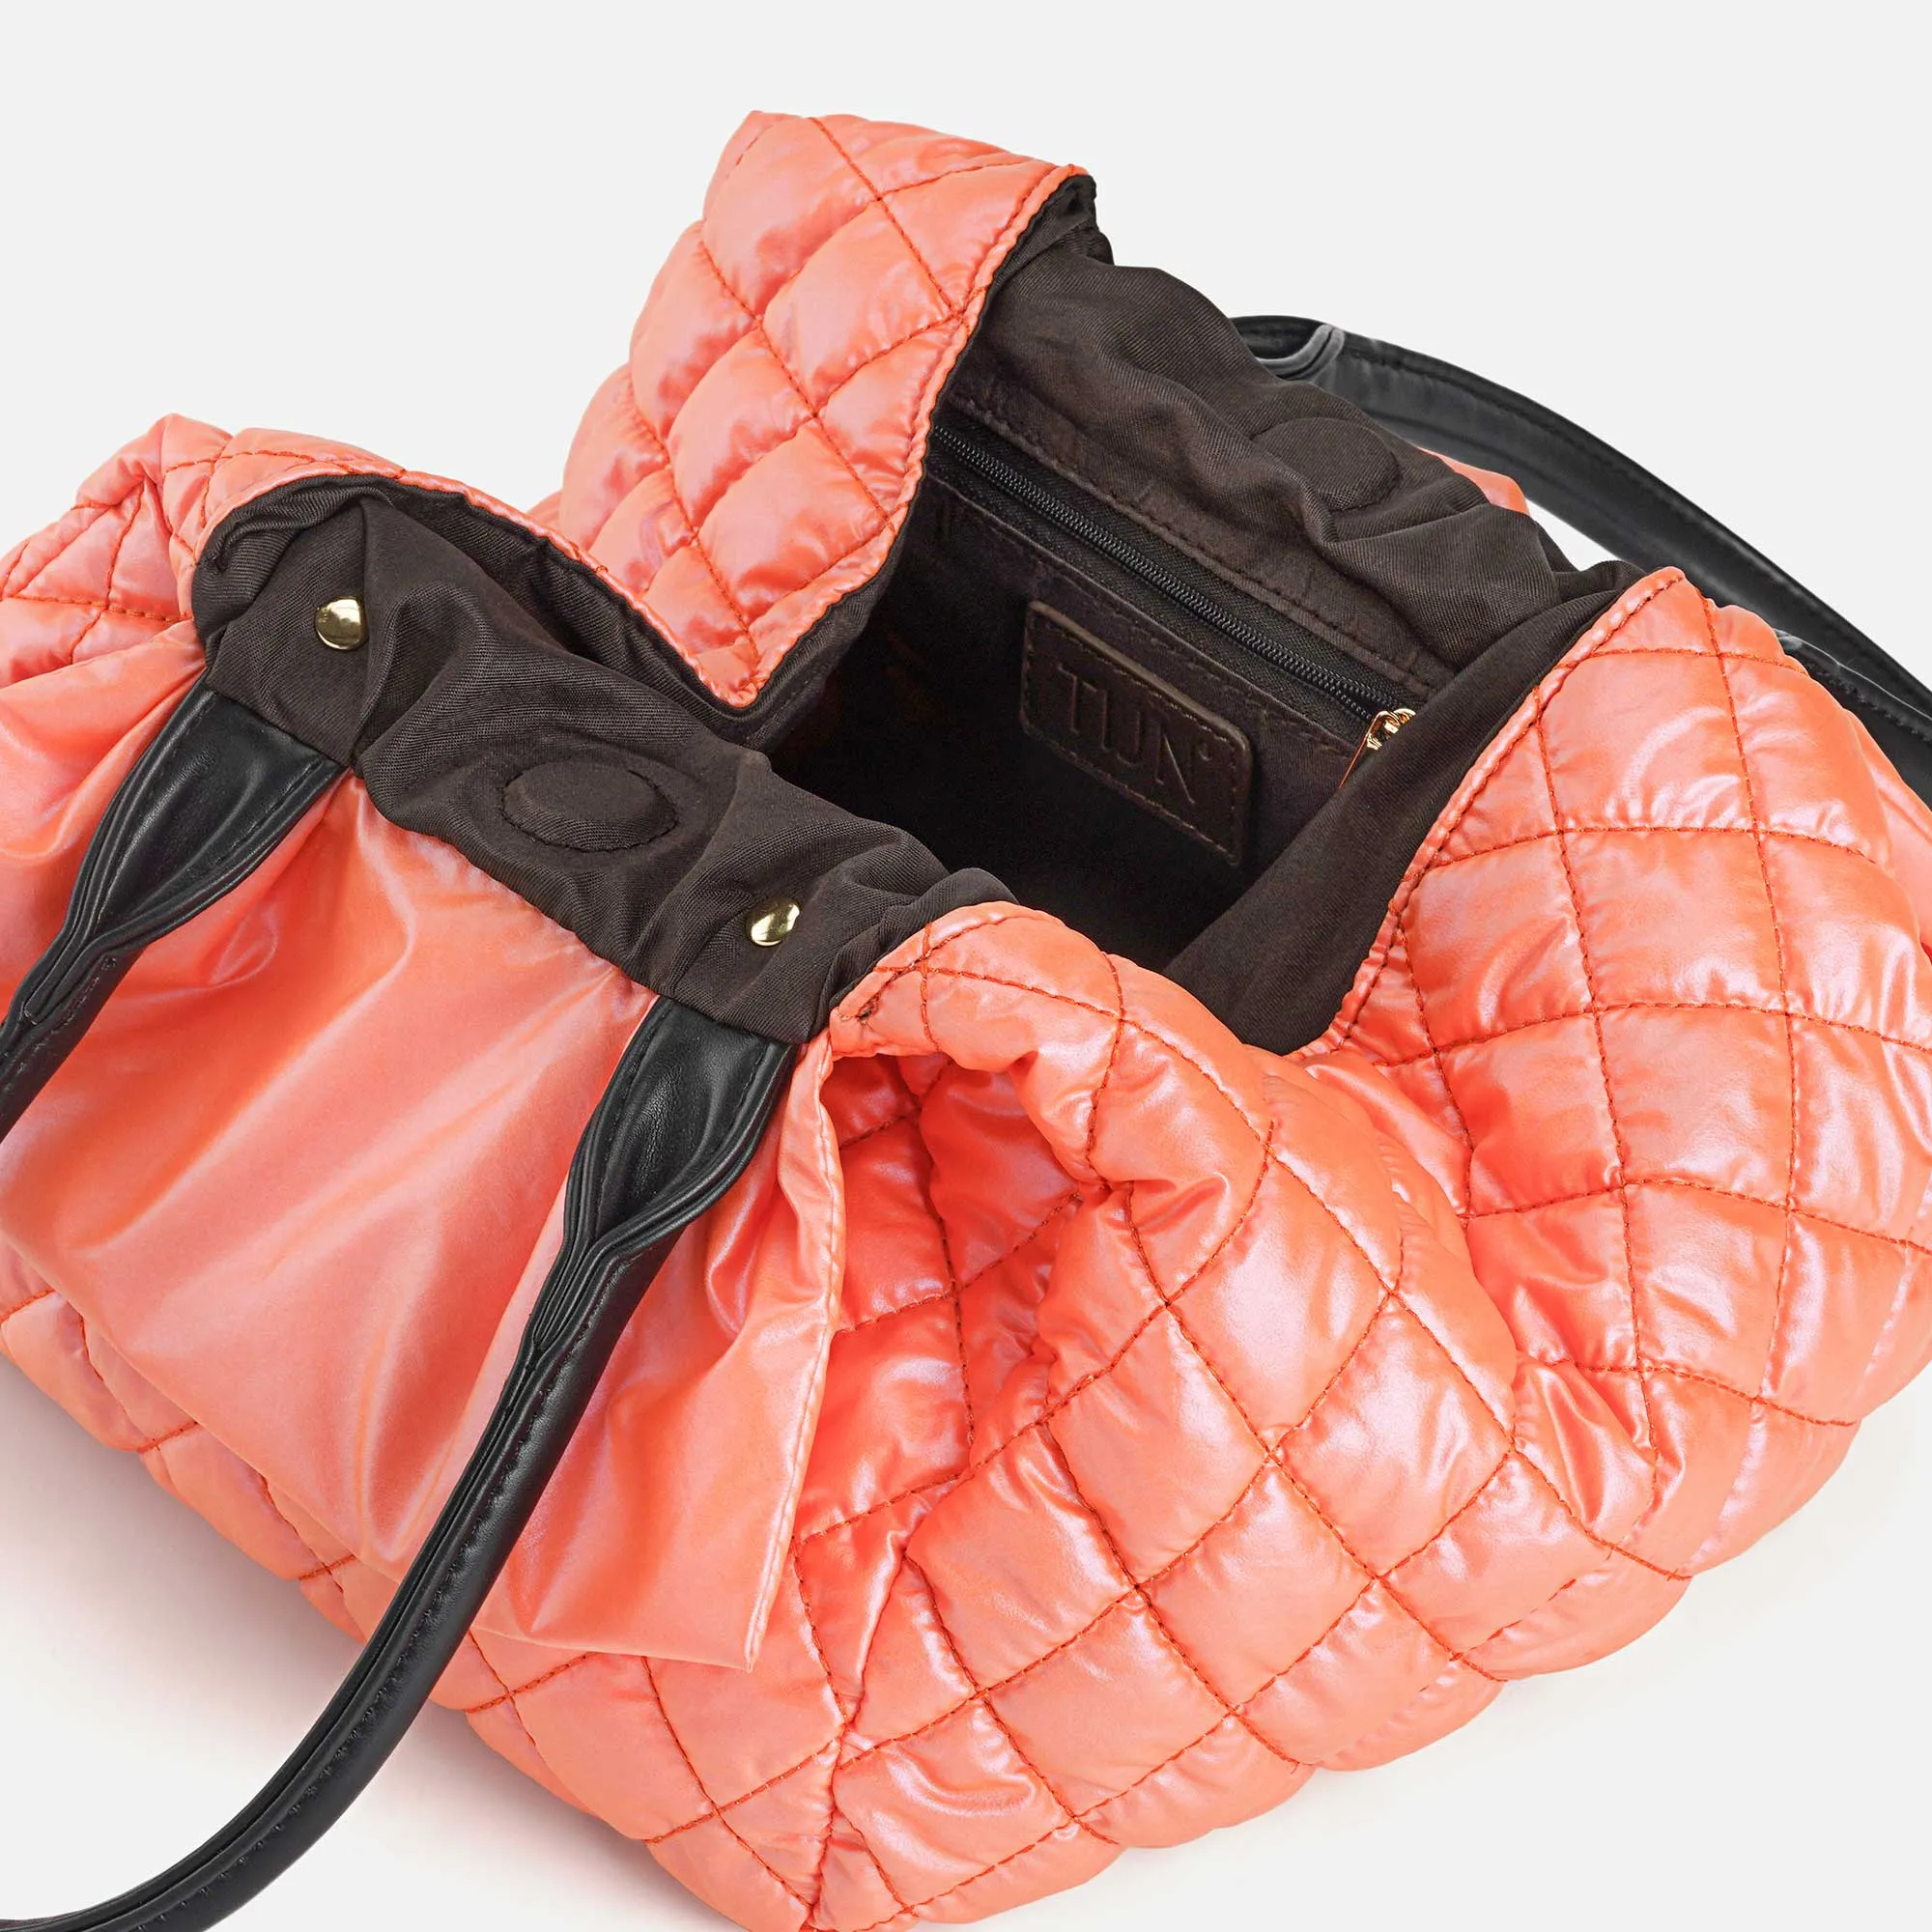 TIJN Orange Peel Harlow Bag Review